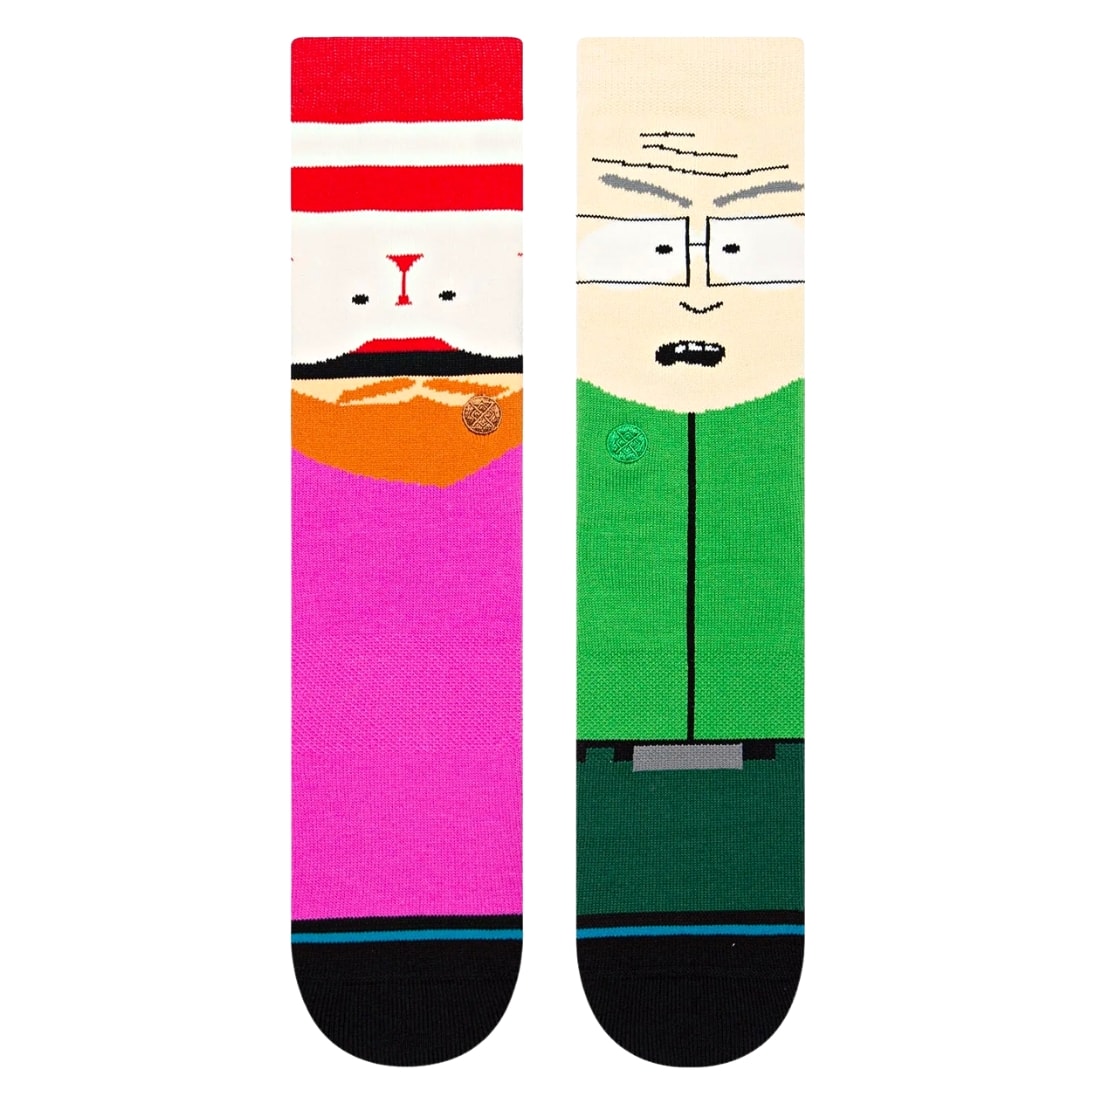 Stance X South Park Mr Garrison Socks - Green - Unisex Crew Length Socks by Stance